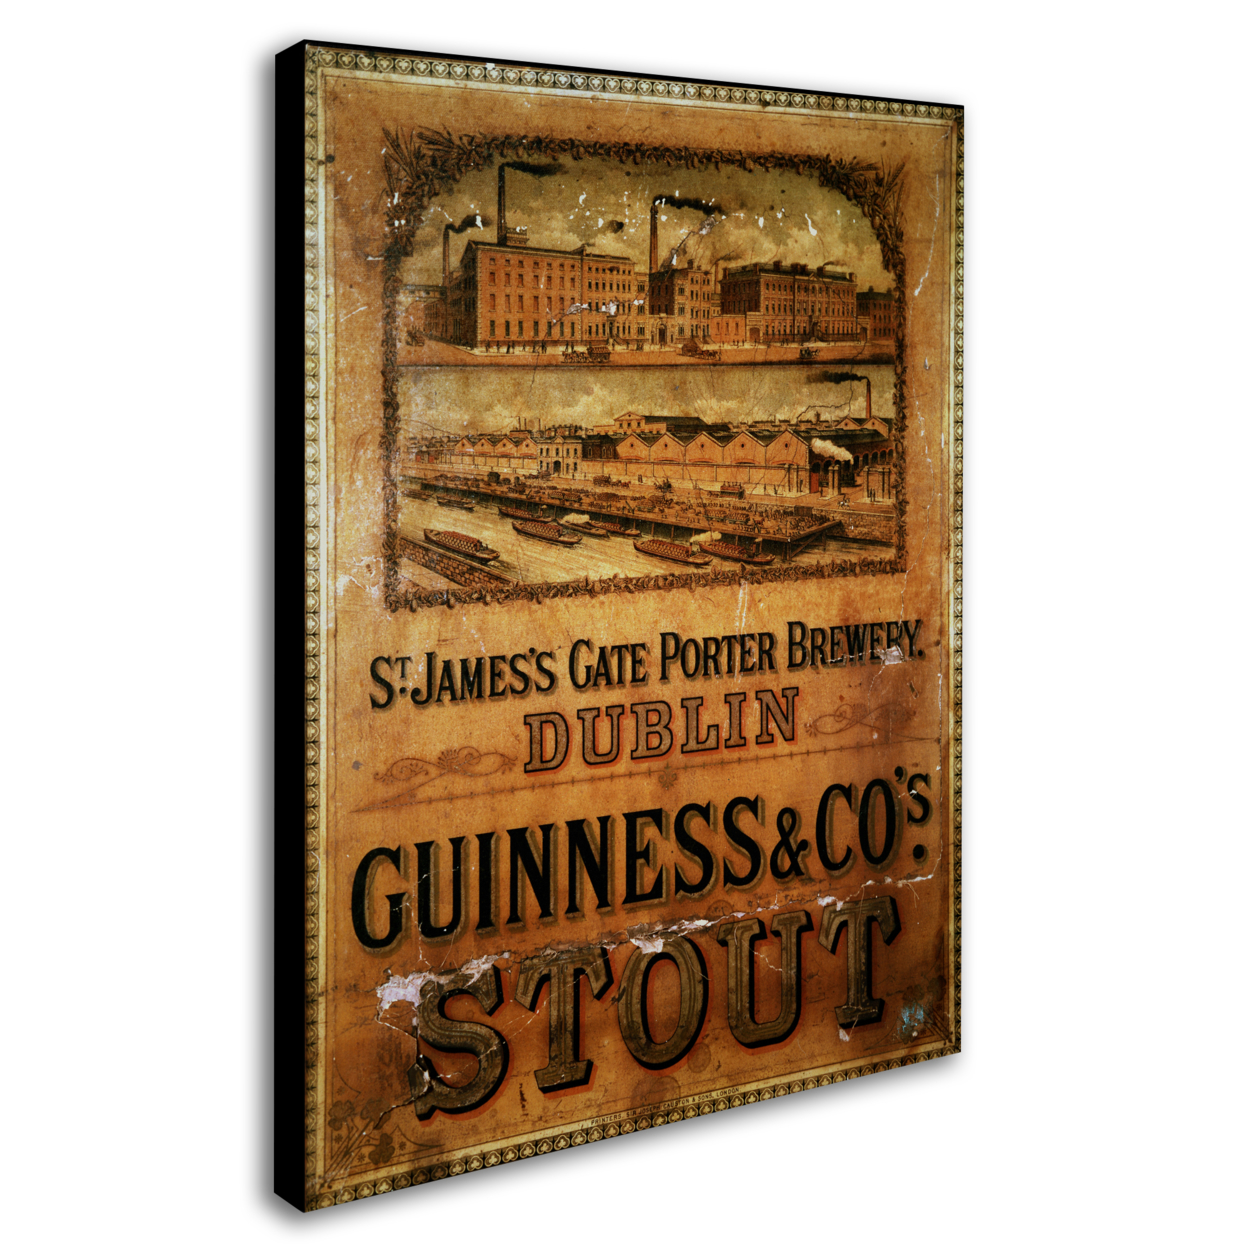 Guinness Brewery 'St. James' Gate Porter Brewery' 14 X 19 Canvas Art